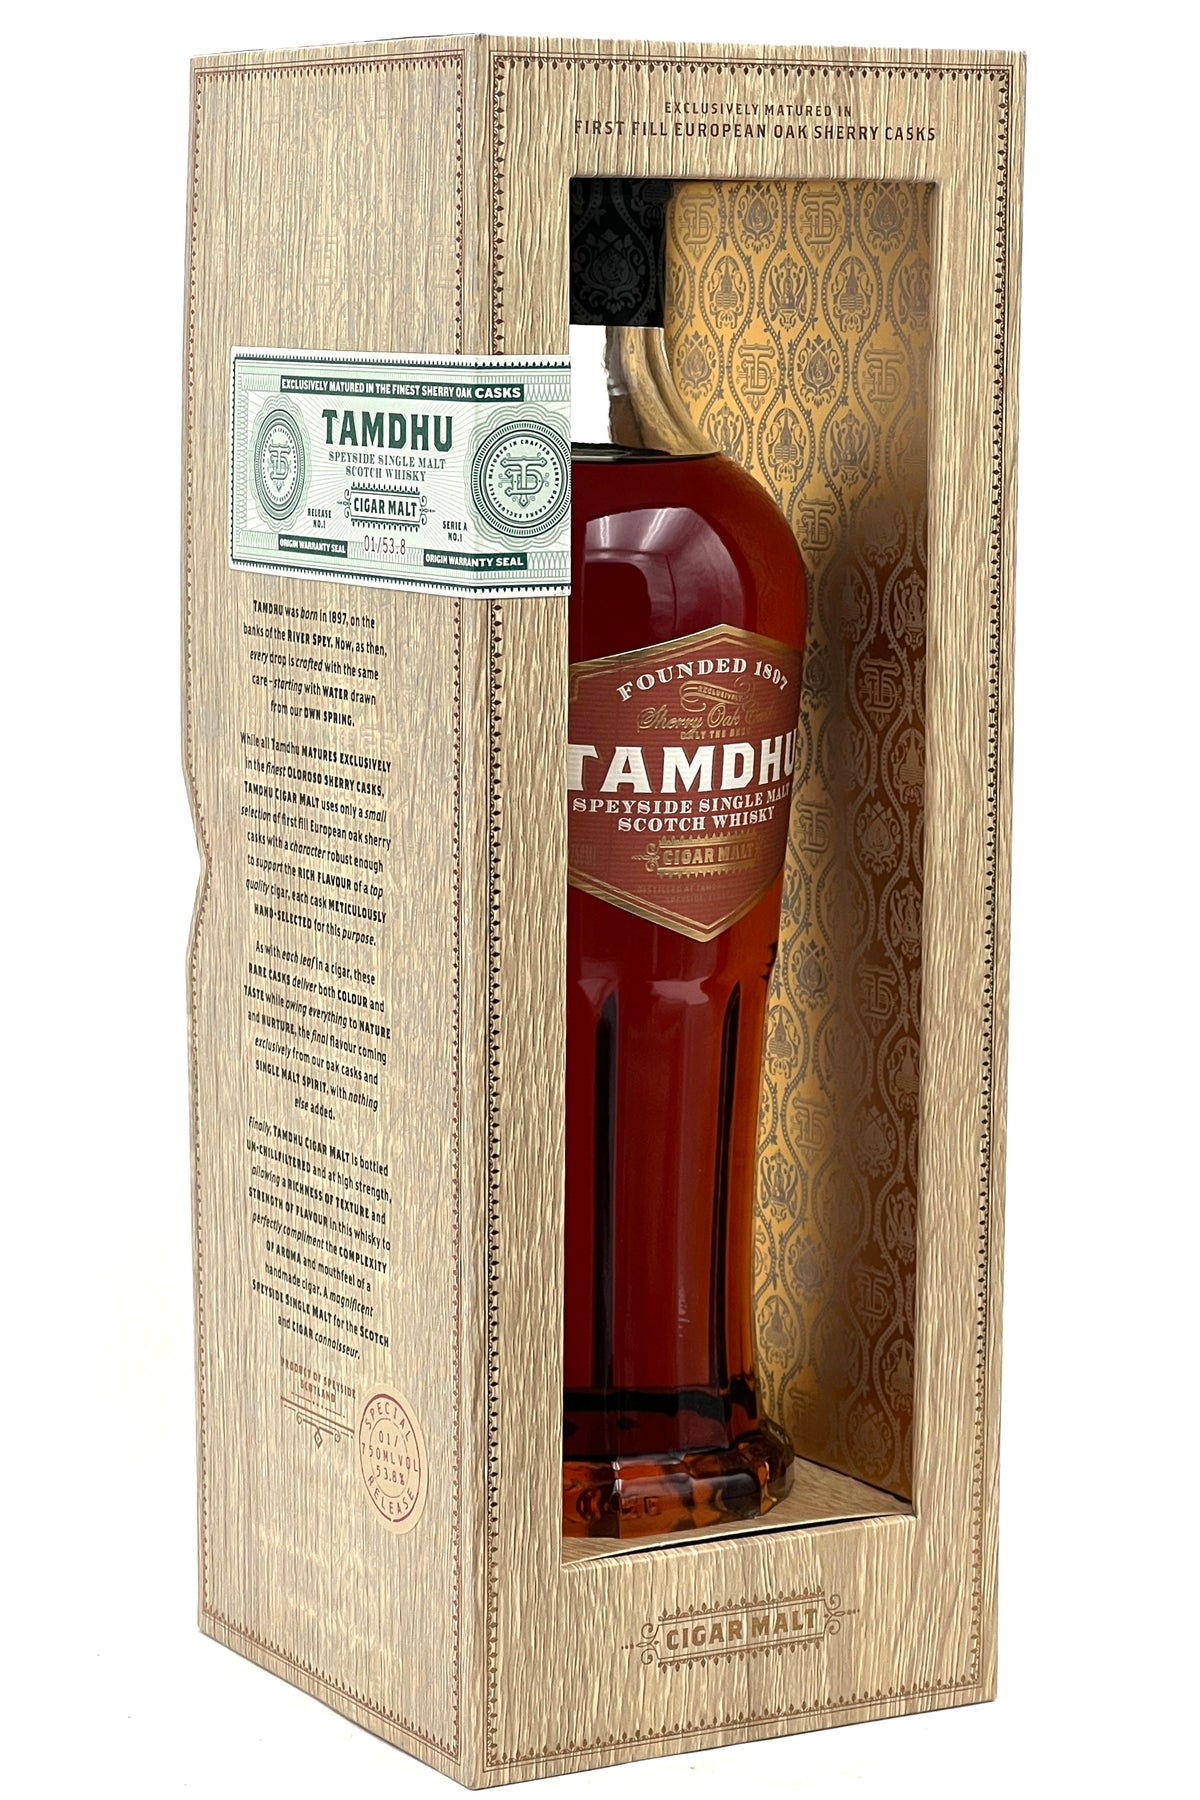 Tamdhu Cigar Malt Single Malt Scotch Whisky